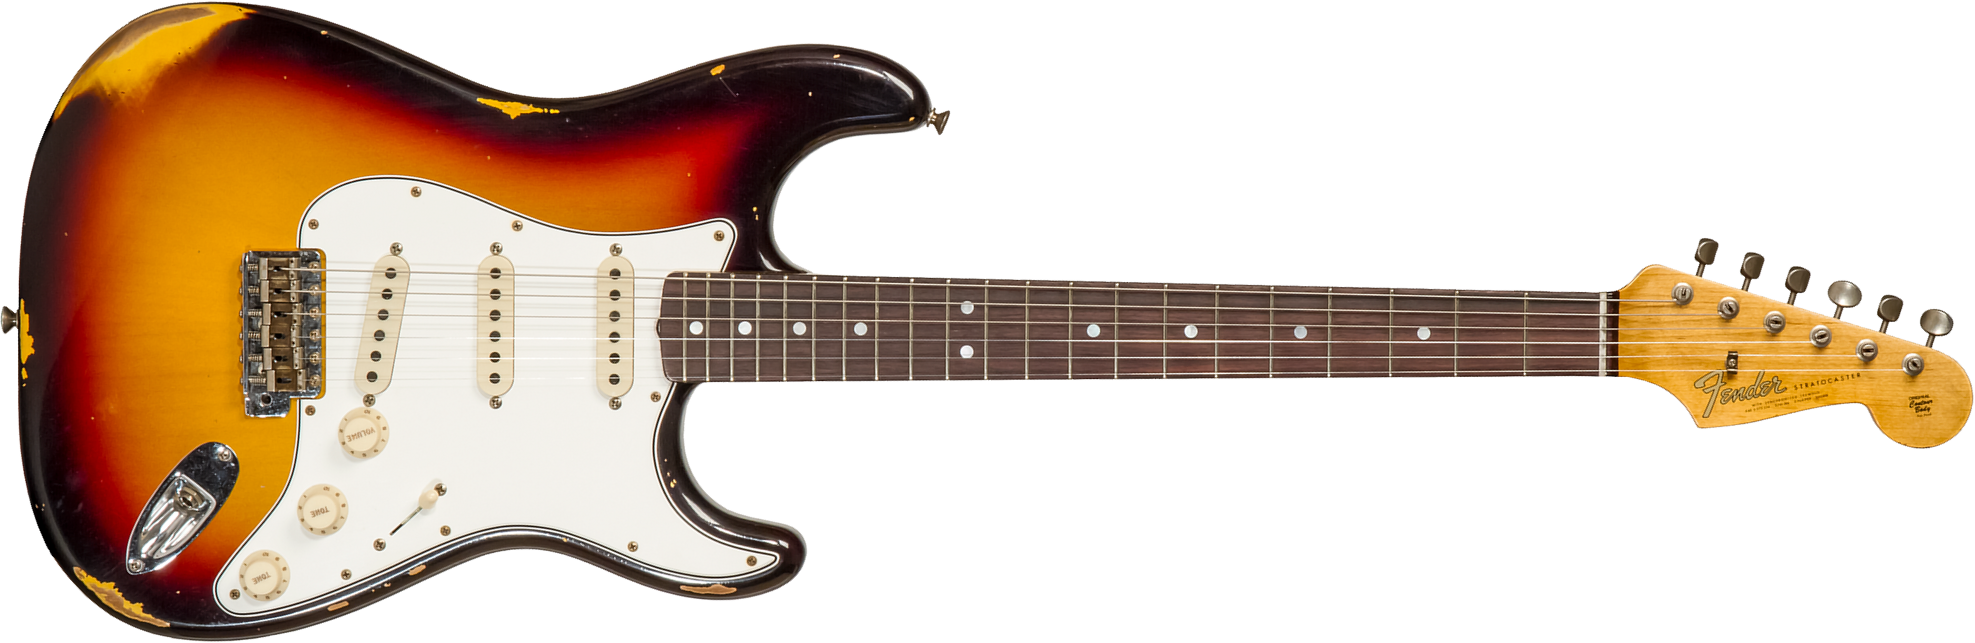 Fender Custom Shop Strat Late 1964 3s Trem Rw #cz569925 - Relic Target 3-color Sunburst - E-Gitarre in Str-Form - Main picture